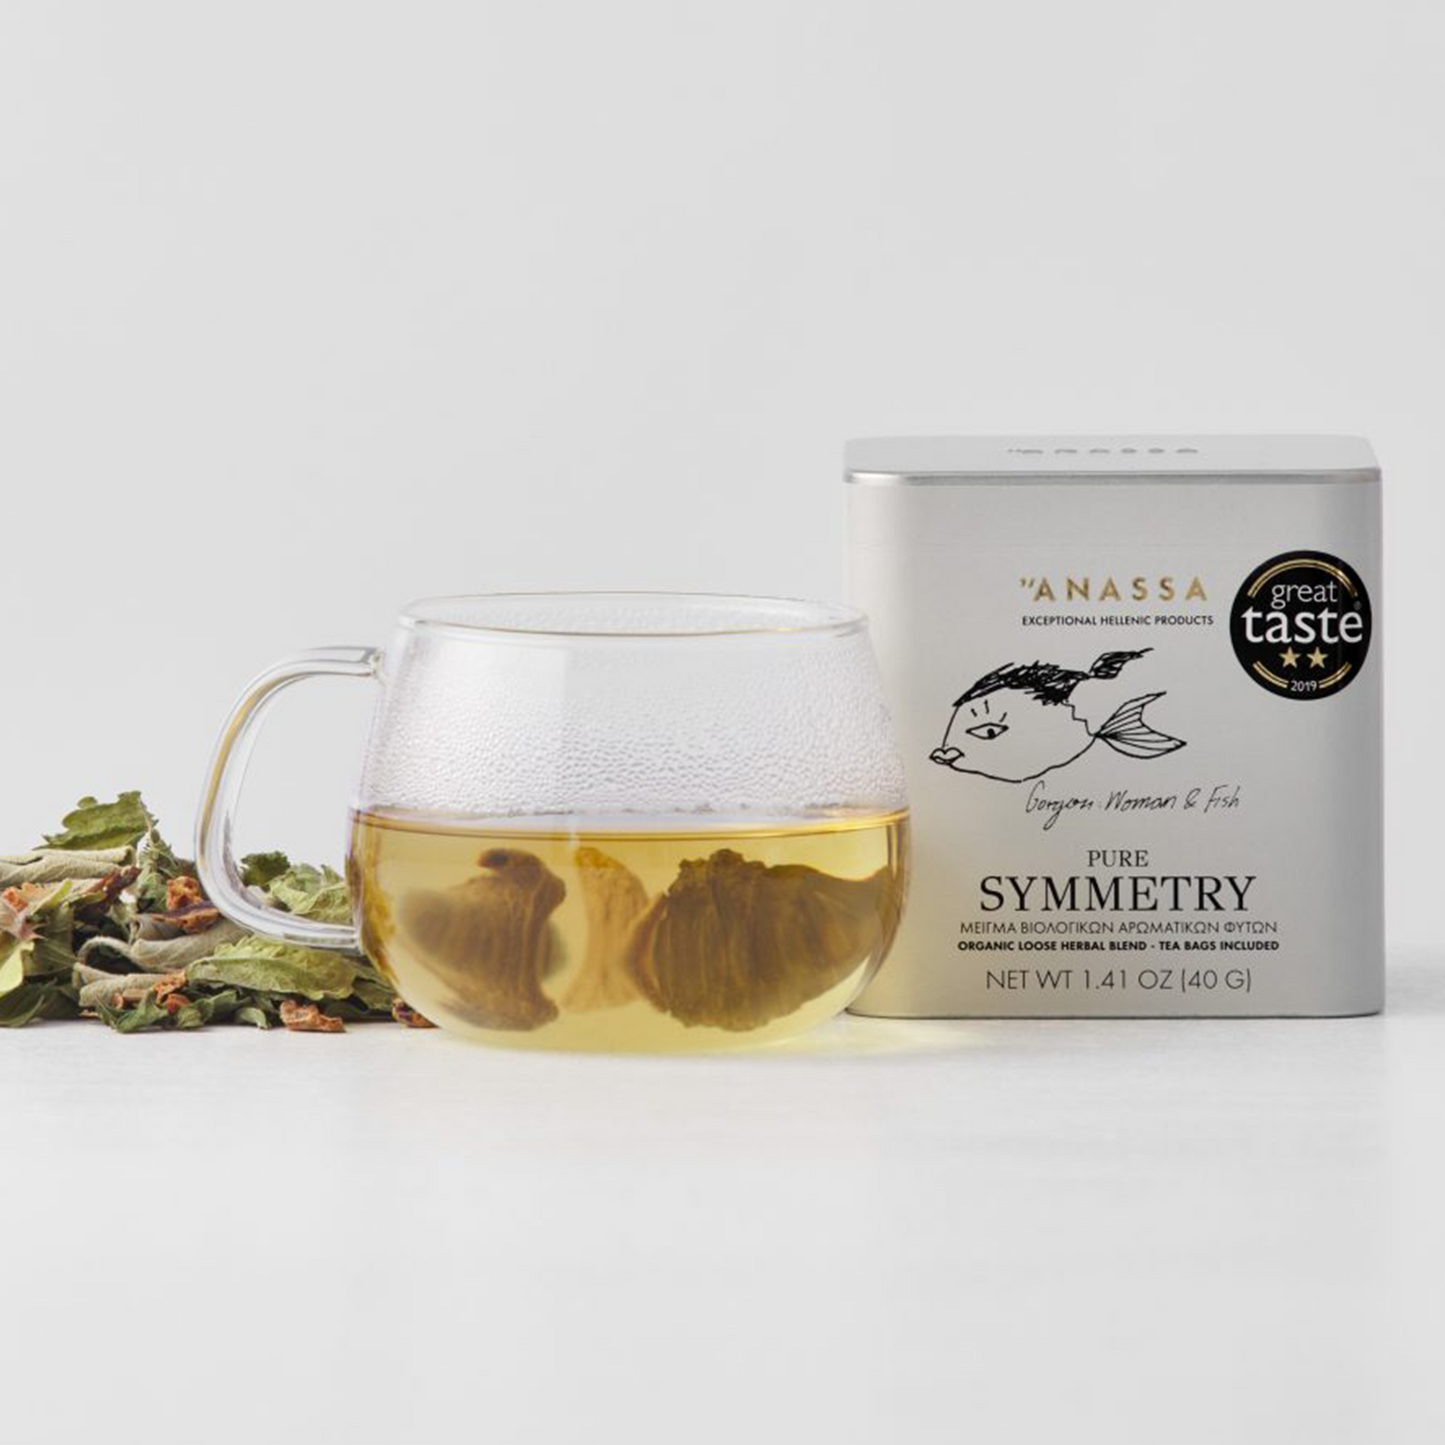 Anassa Premium Organic Tea Pure Symmetry χαλαρό